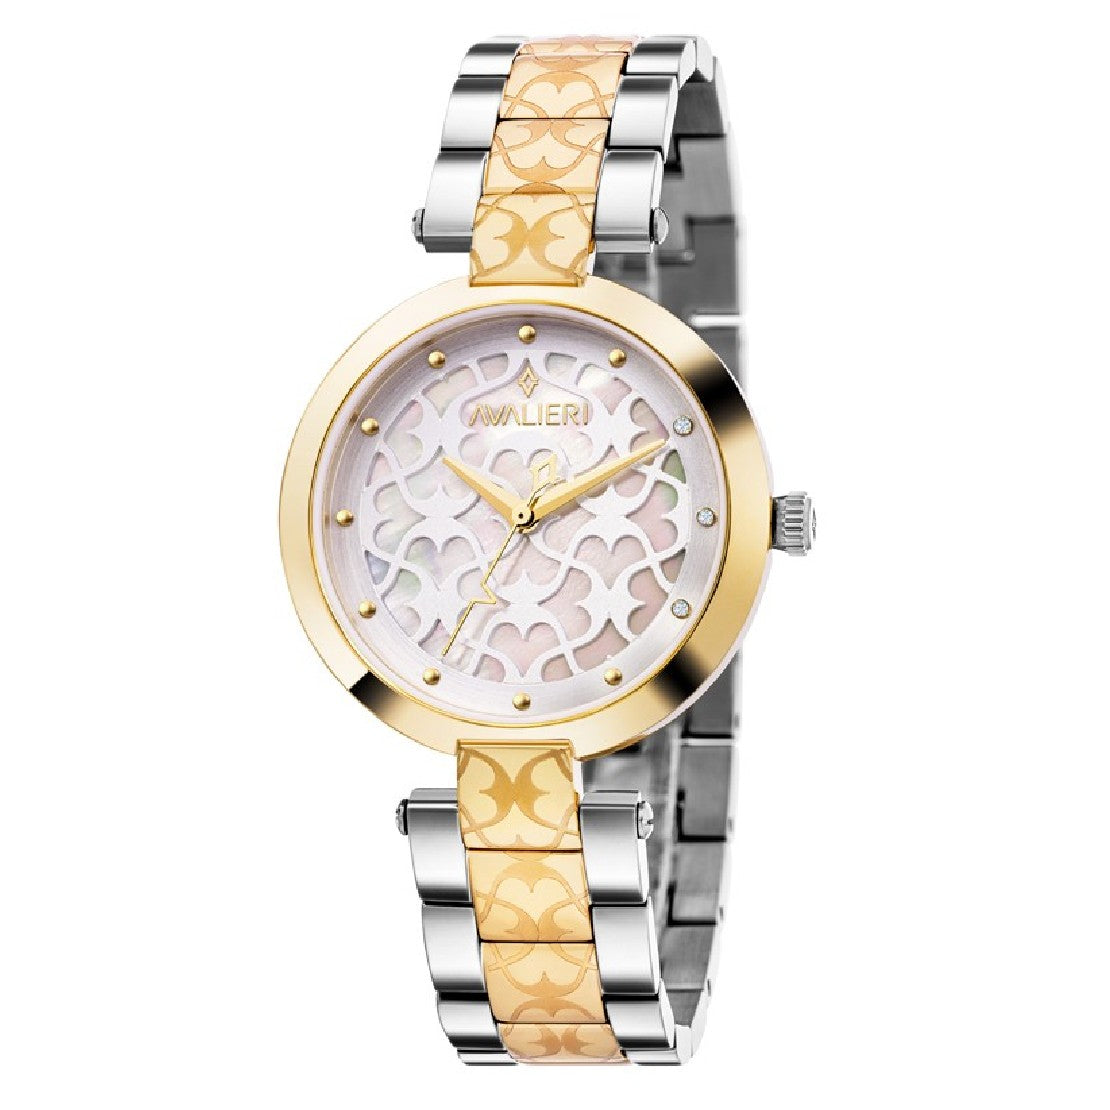 Avalieri Women's Quartz Watch Silver Dial - AV-2337B